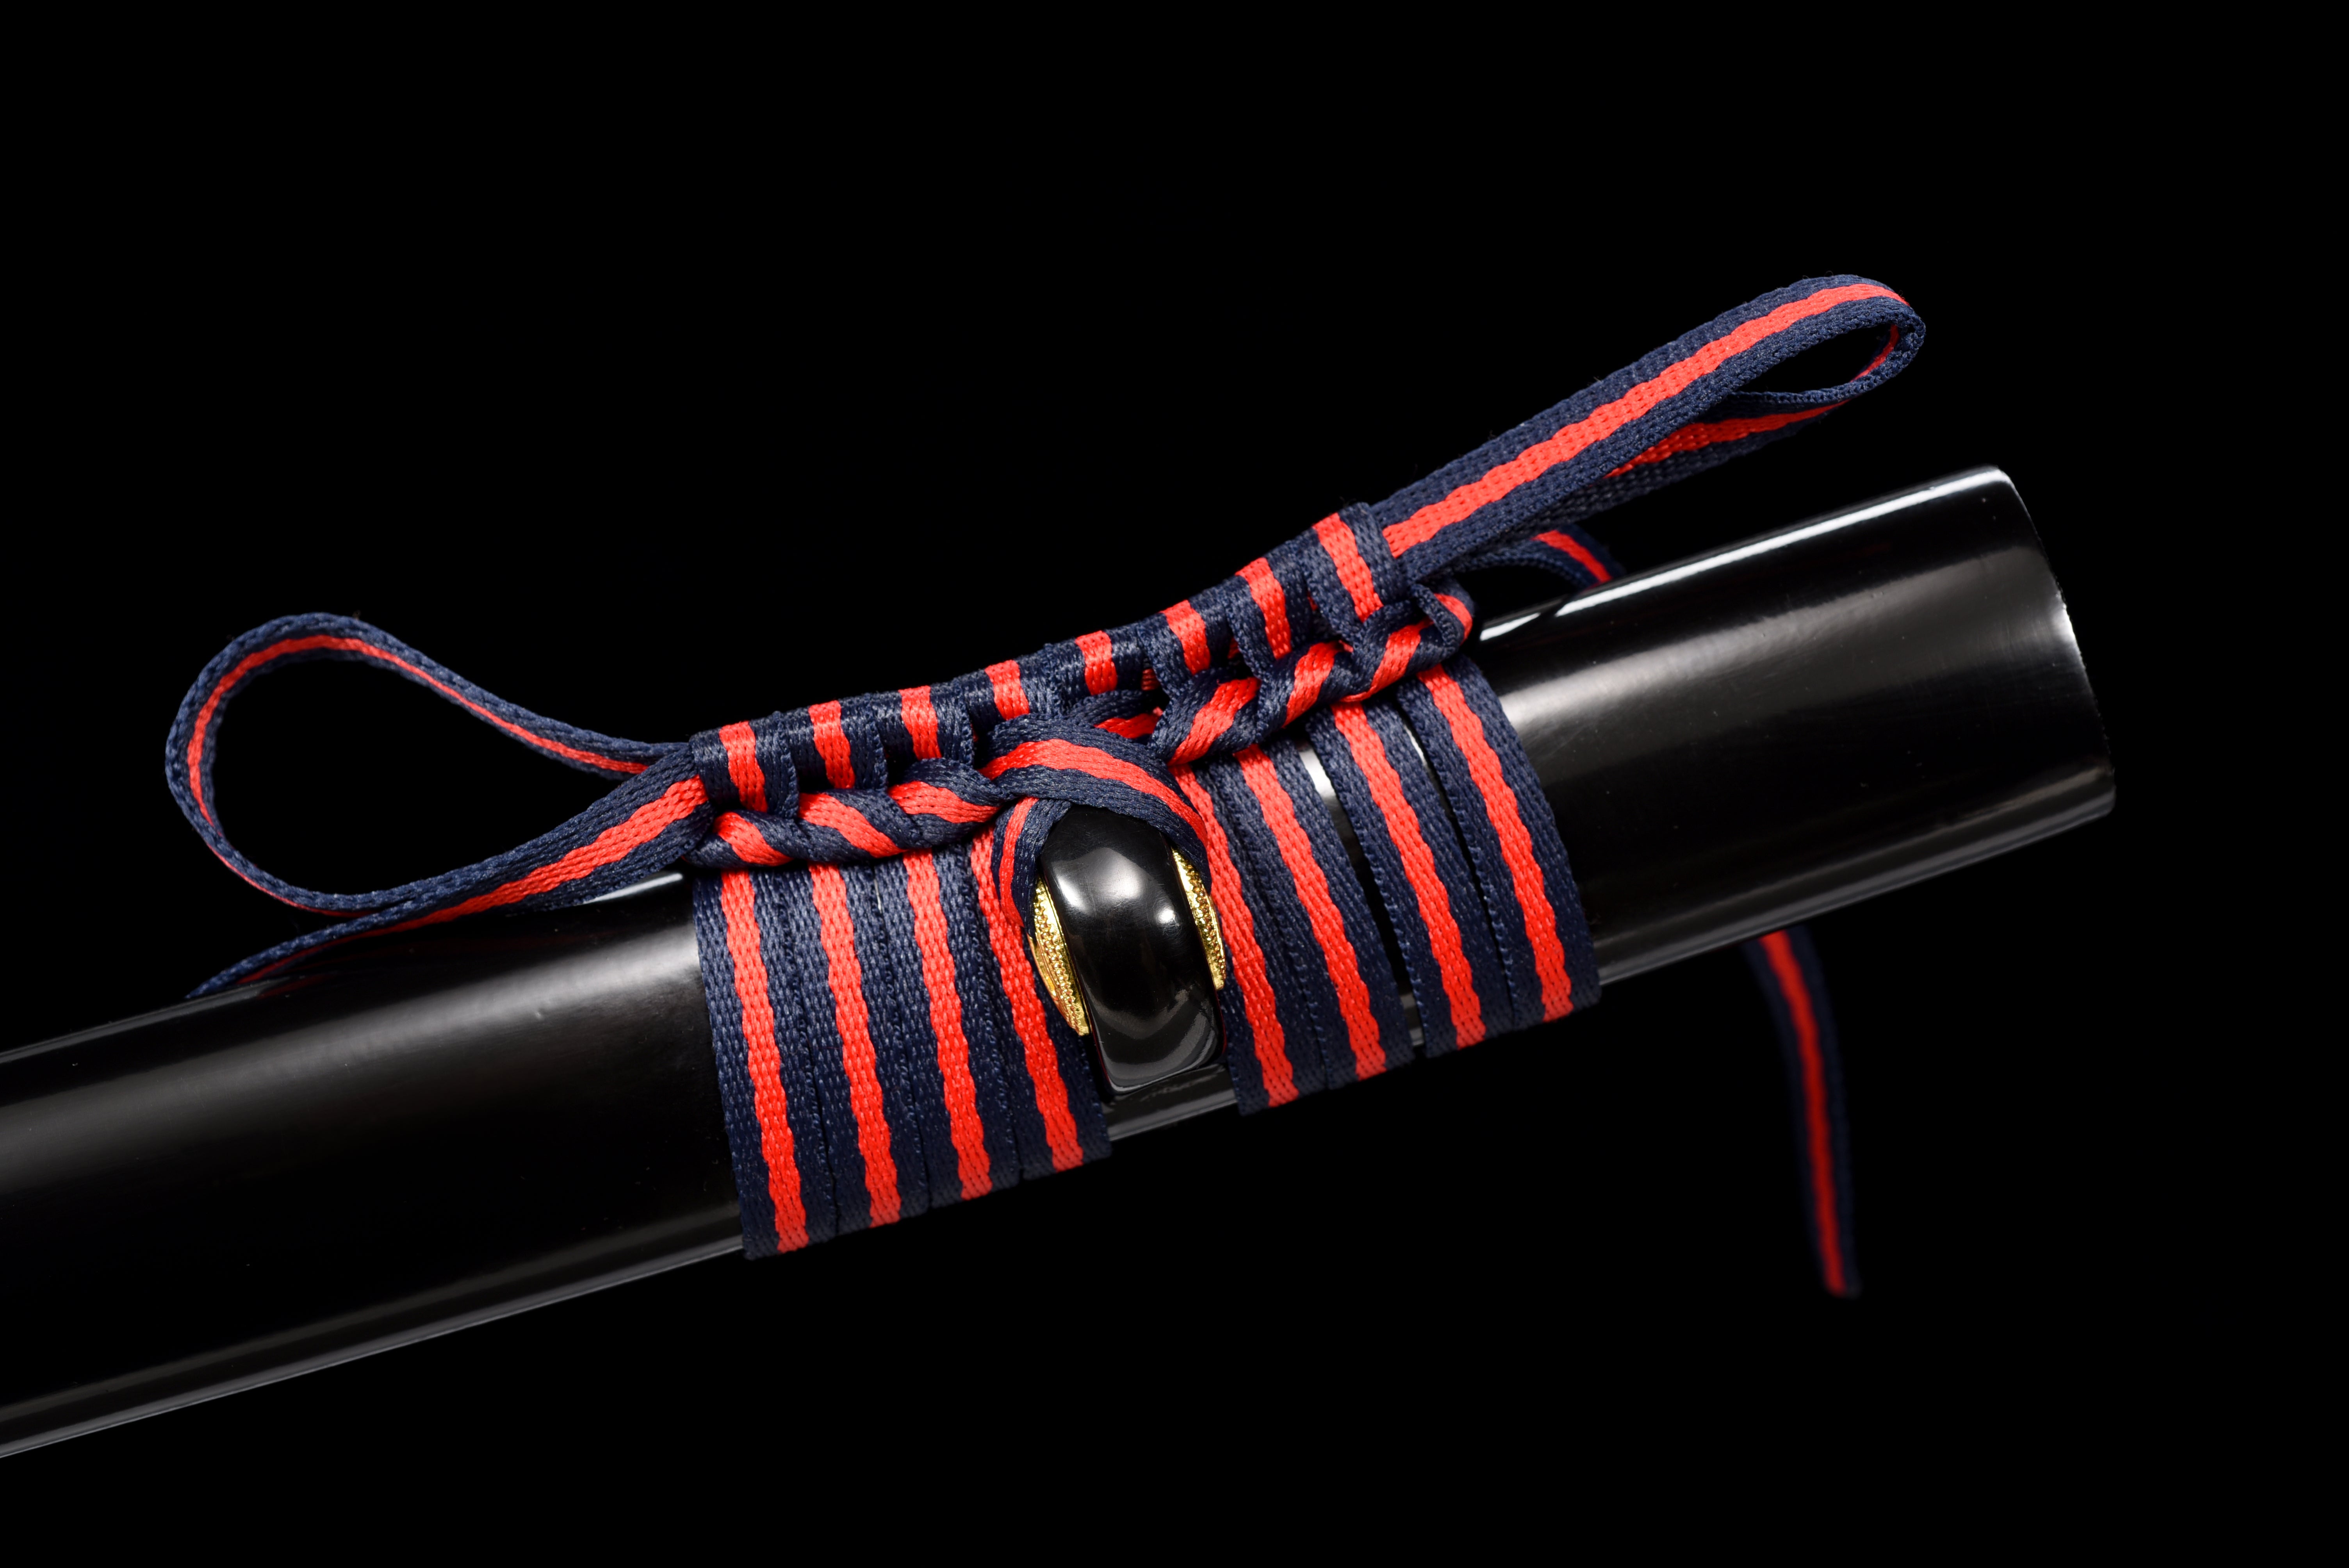 Handmade Black Blade Katana Sword -Golden dragon Real Japanese Samurai Sword 1060 High Carbon Steel Full Tang